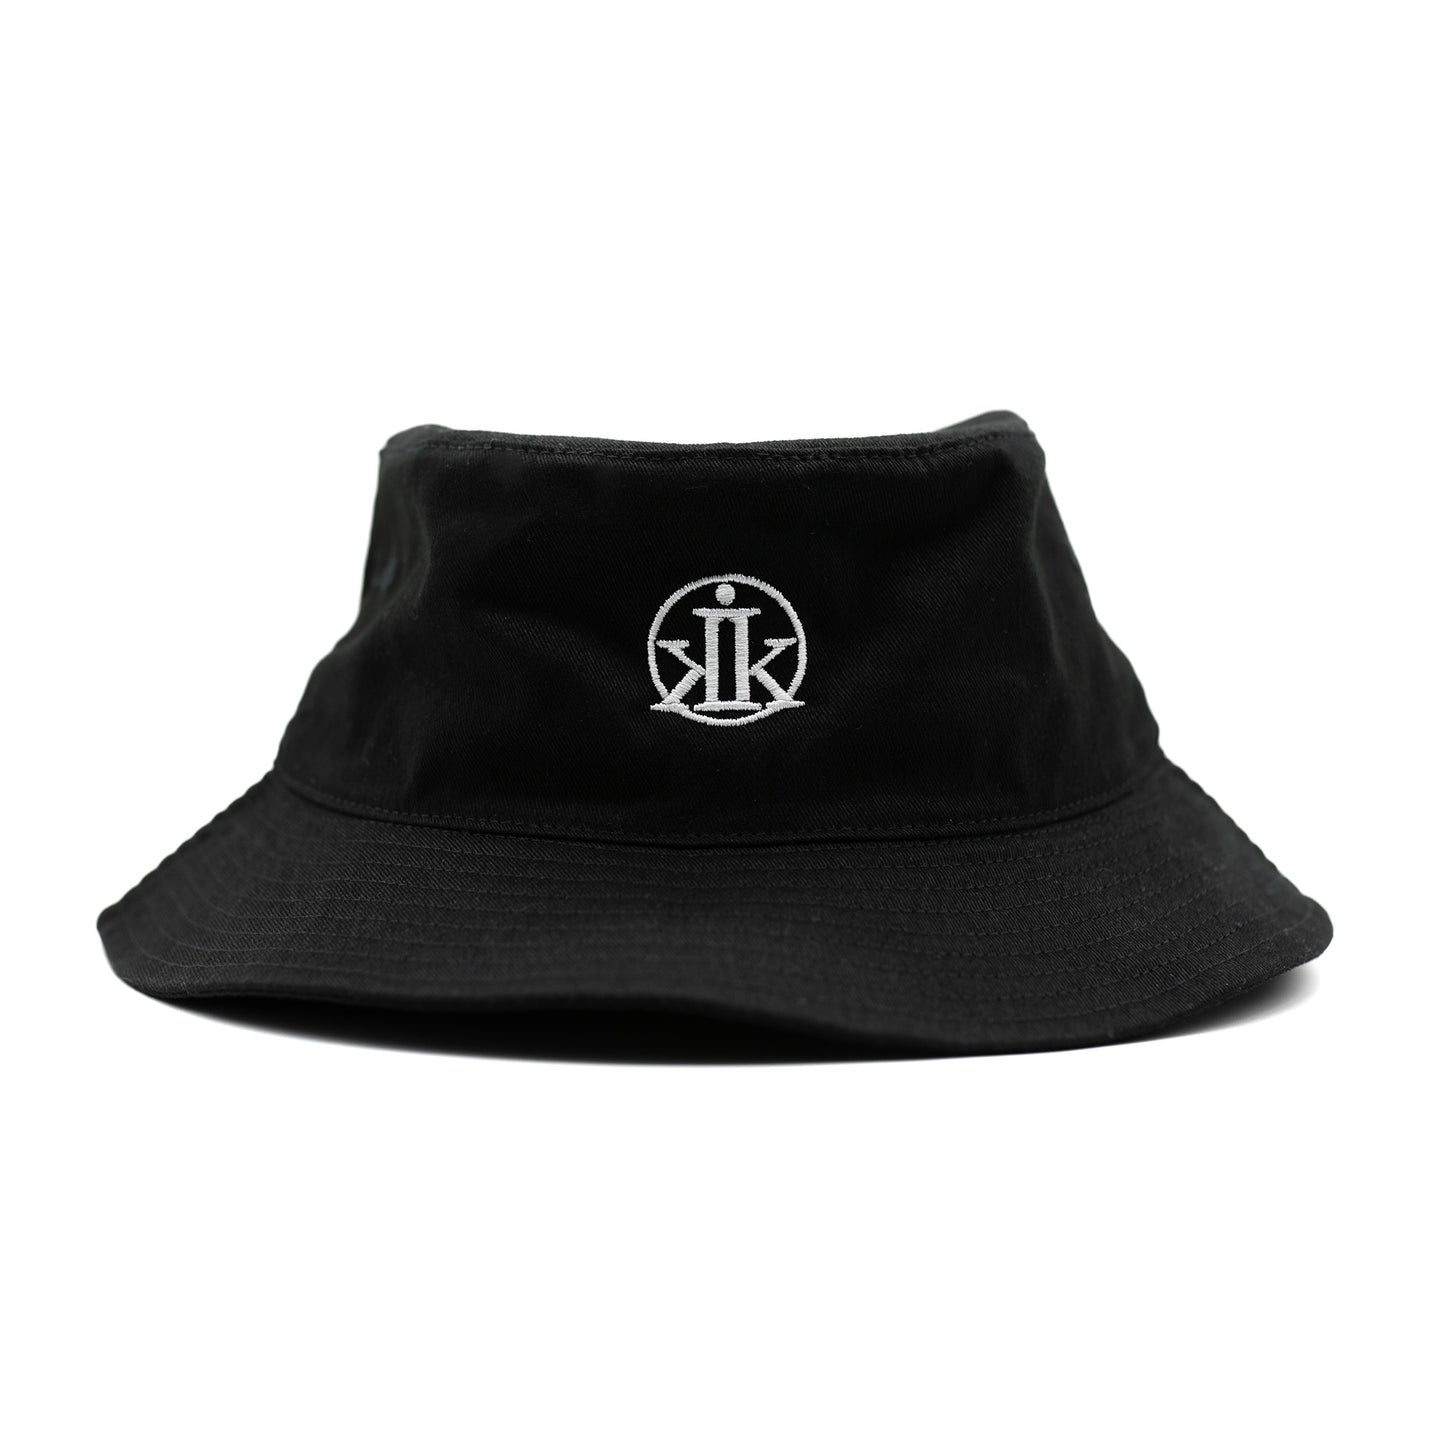 $15 Mystery Hat - IKendoit.Shop